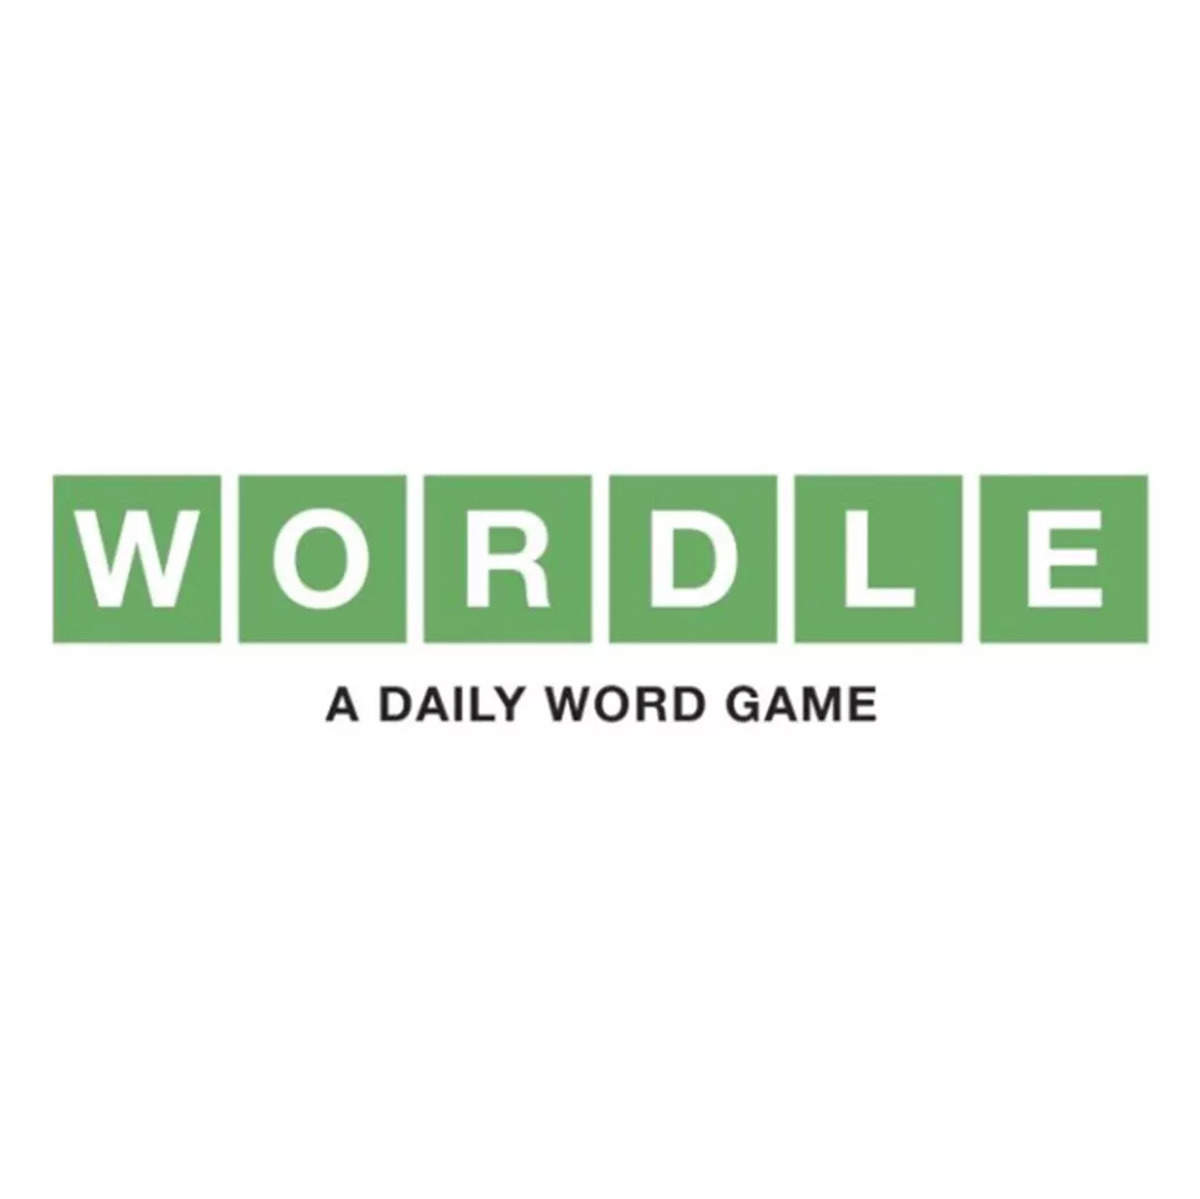 Wordle Alternatives - A Comprehensive List : r/wordle